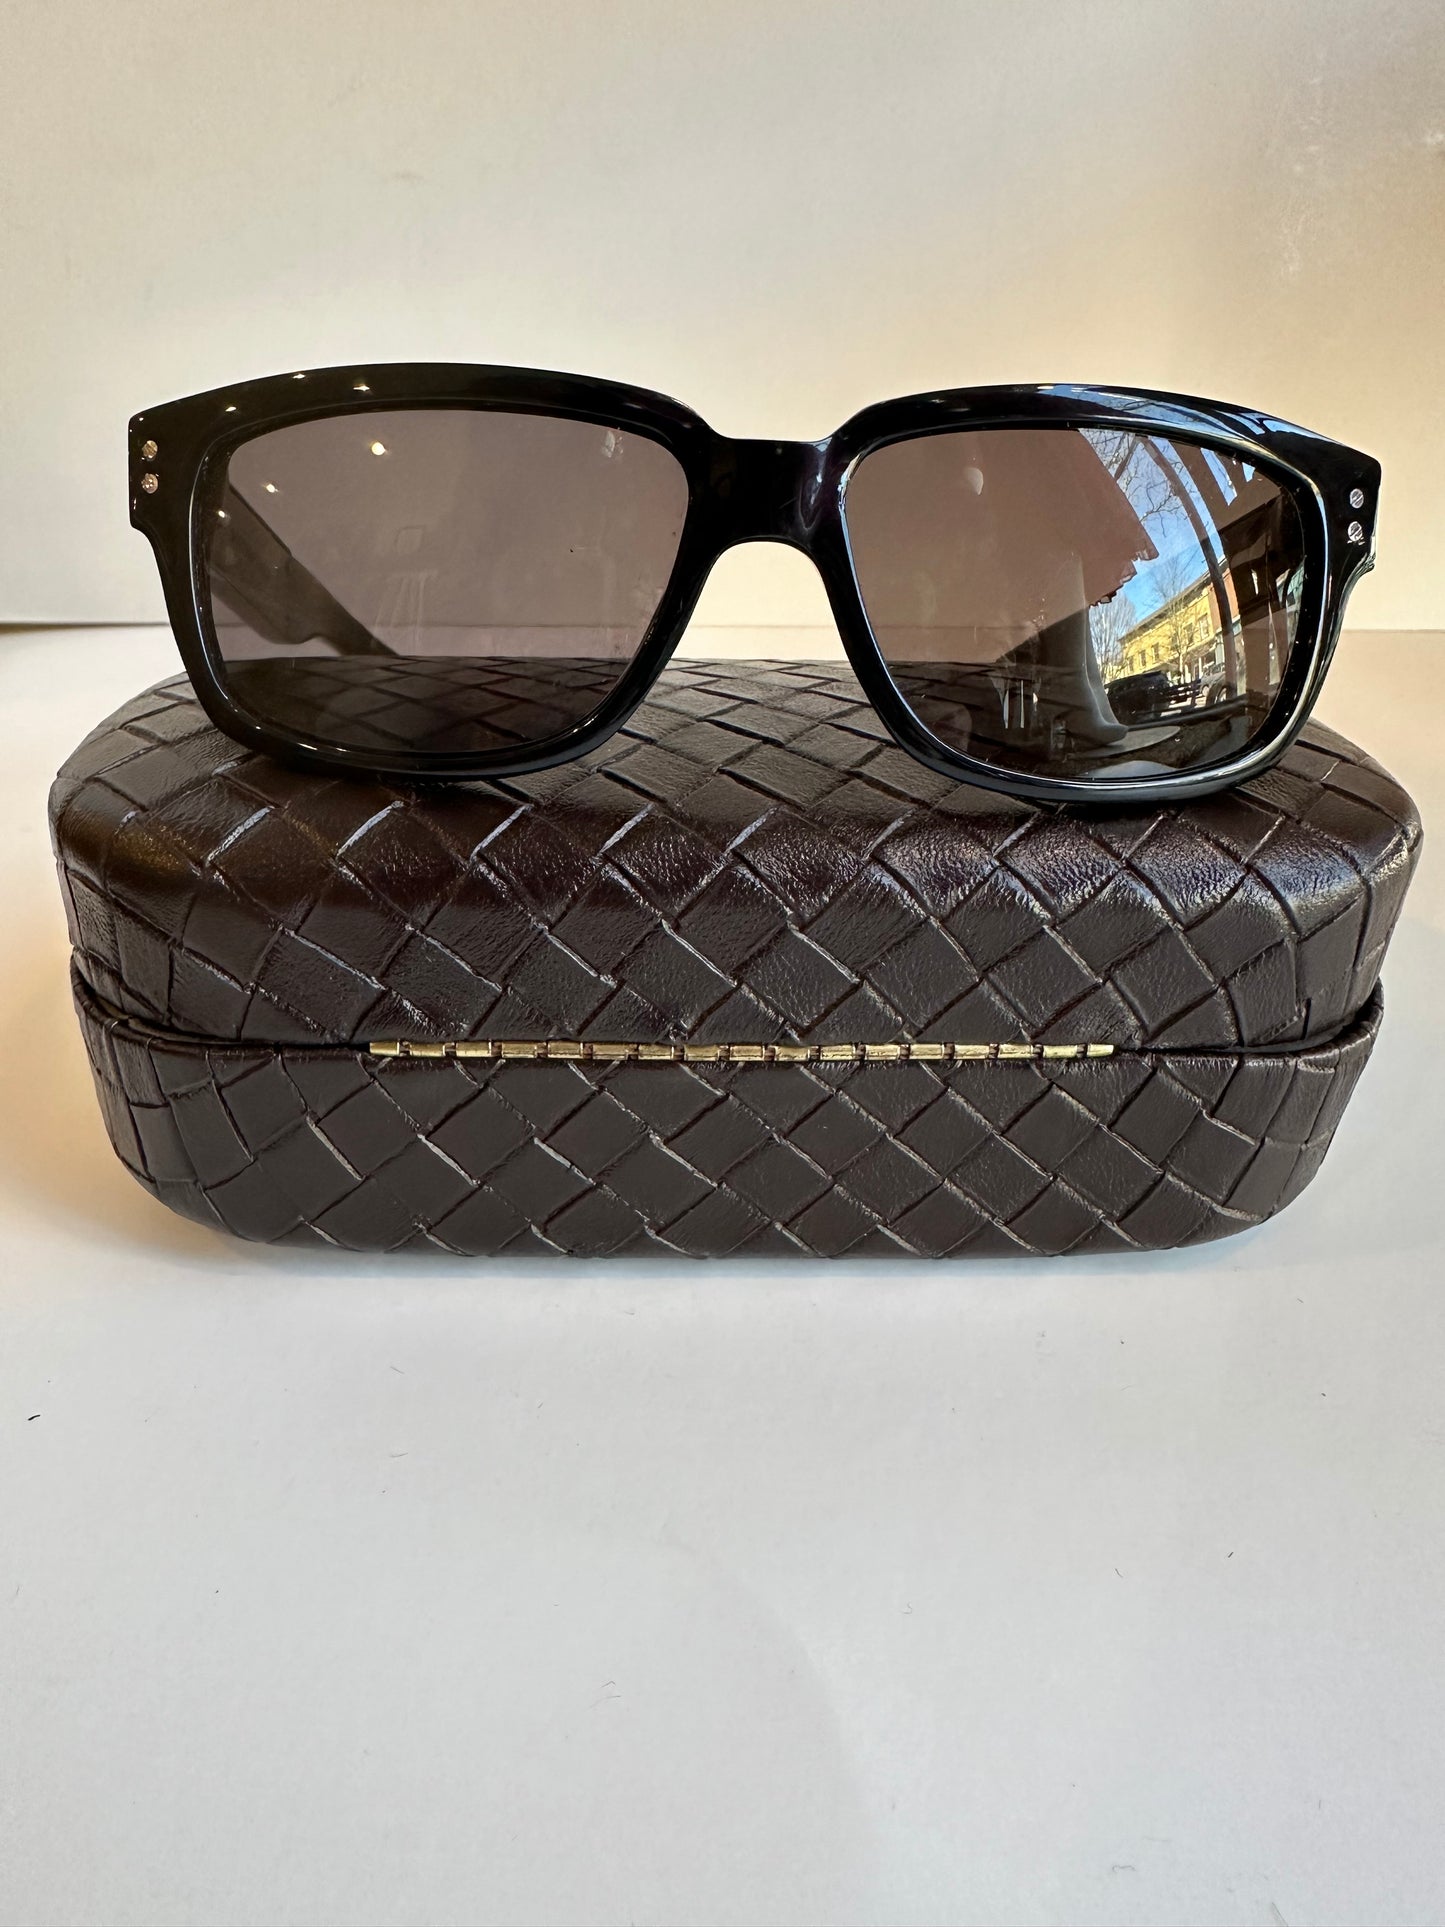 Urban - Bottega Veneta black sunglasses